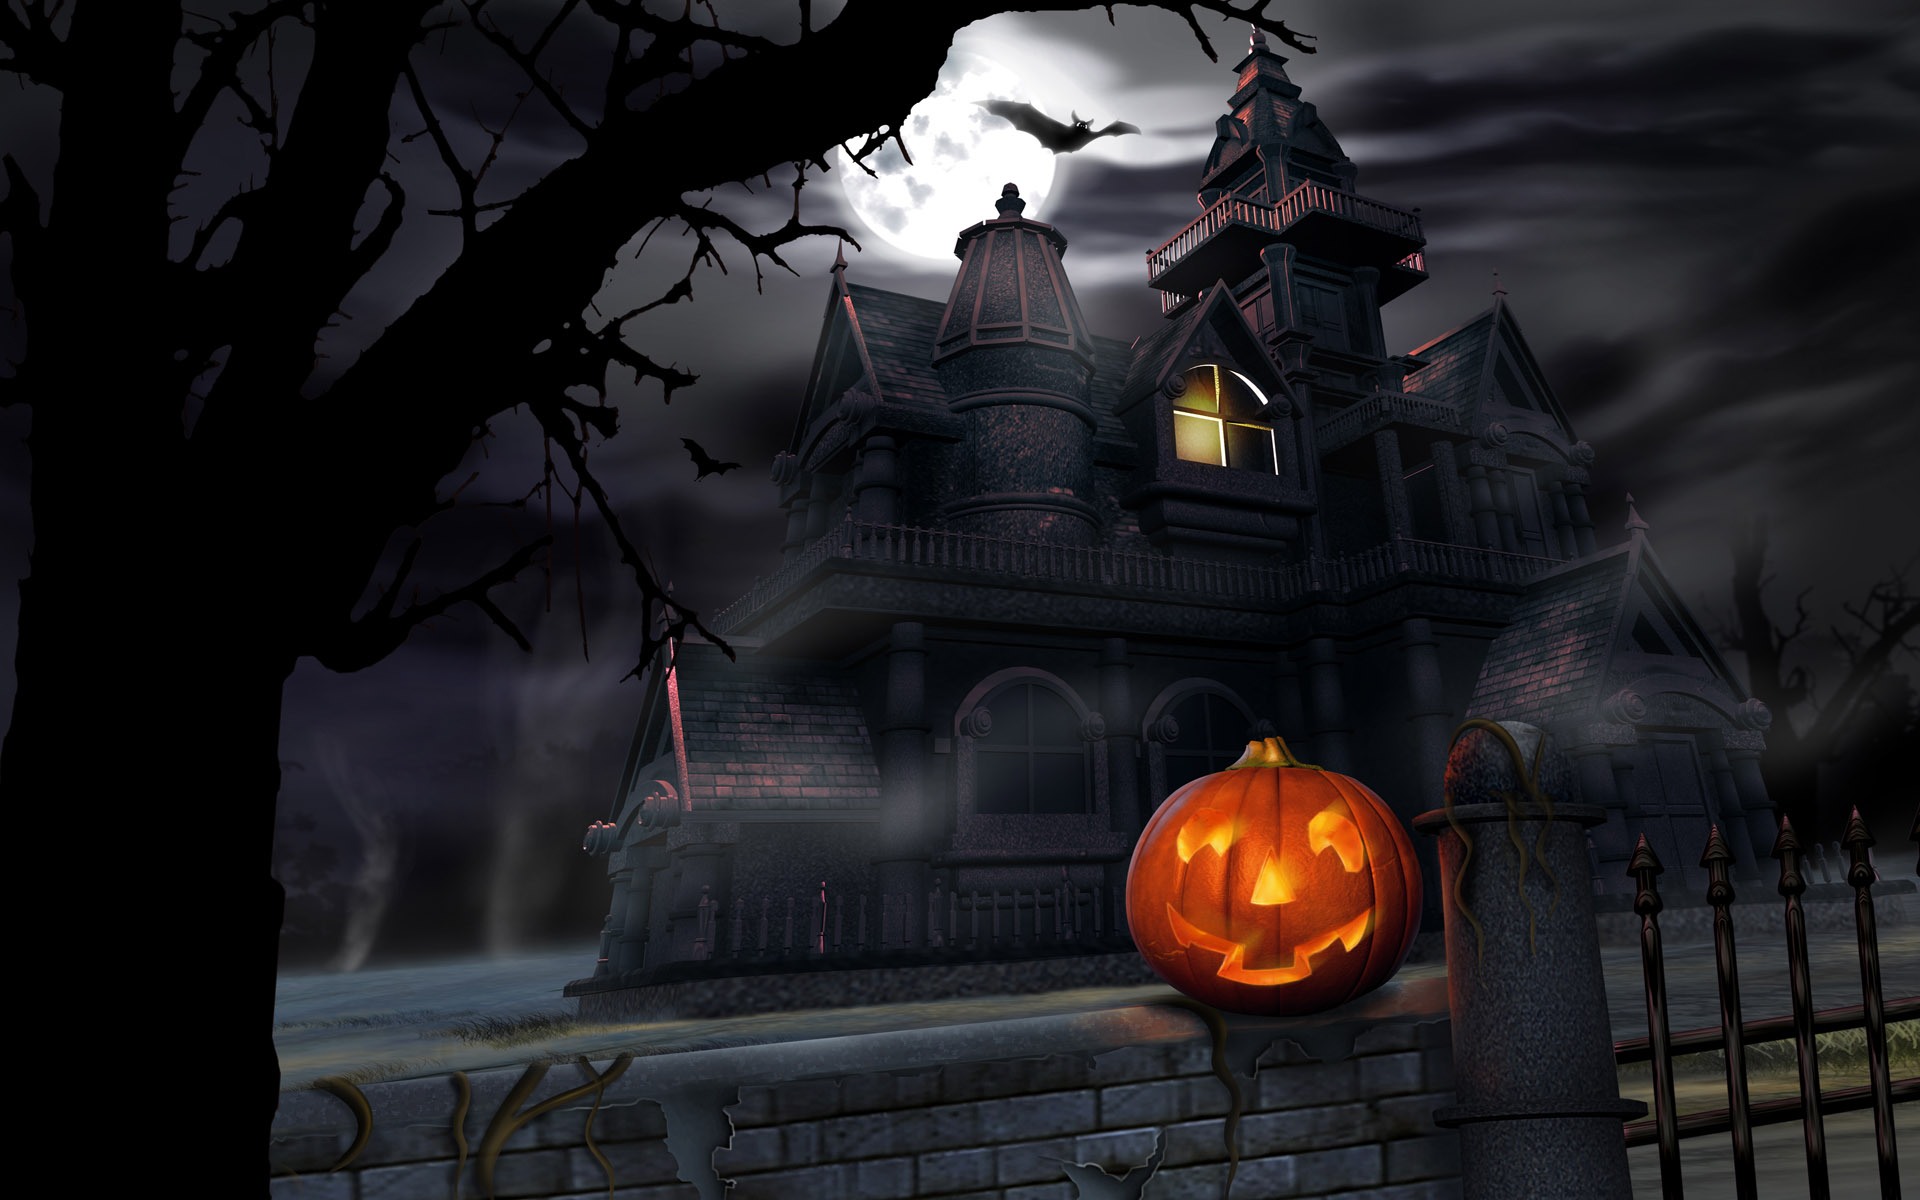 Haunted House Pumpkin desktop wallpaper